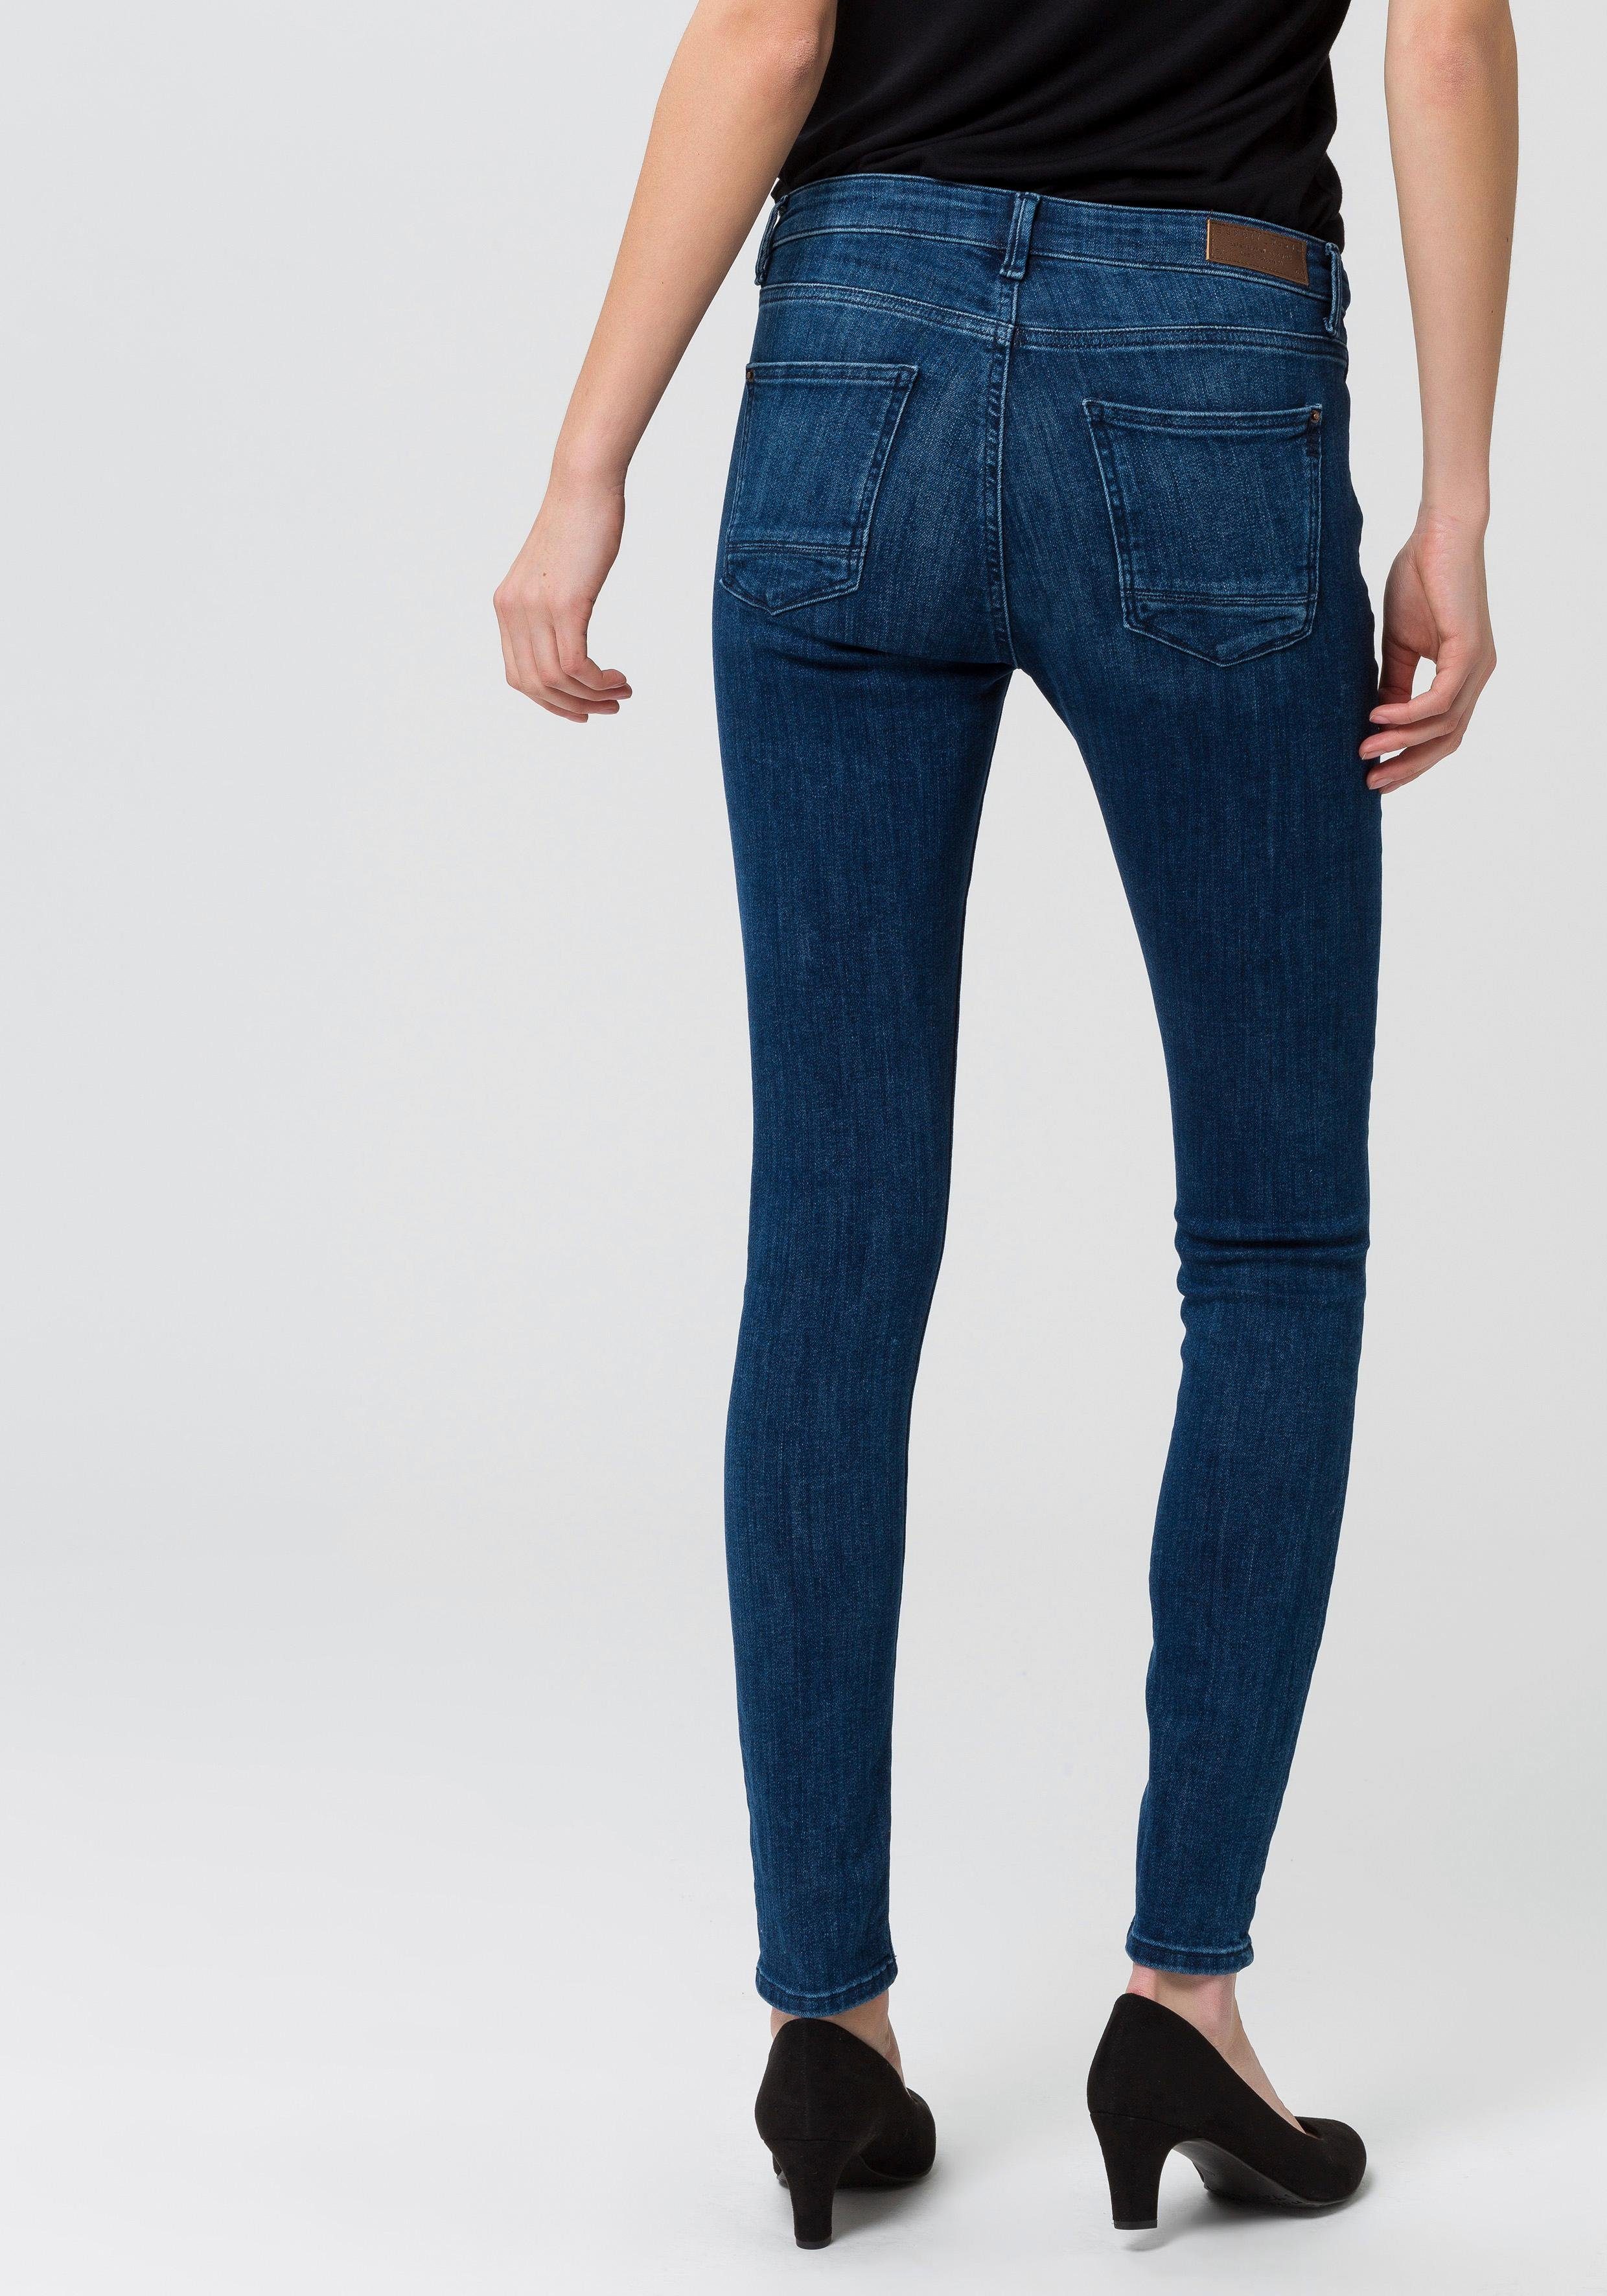 ESPRIT NU 15% KORTING: ESPRIT skinny fit jeans